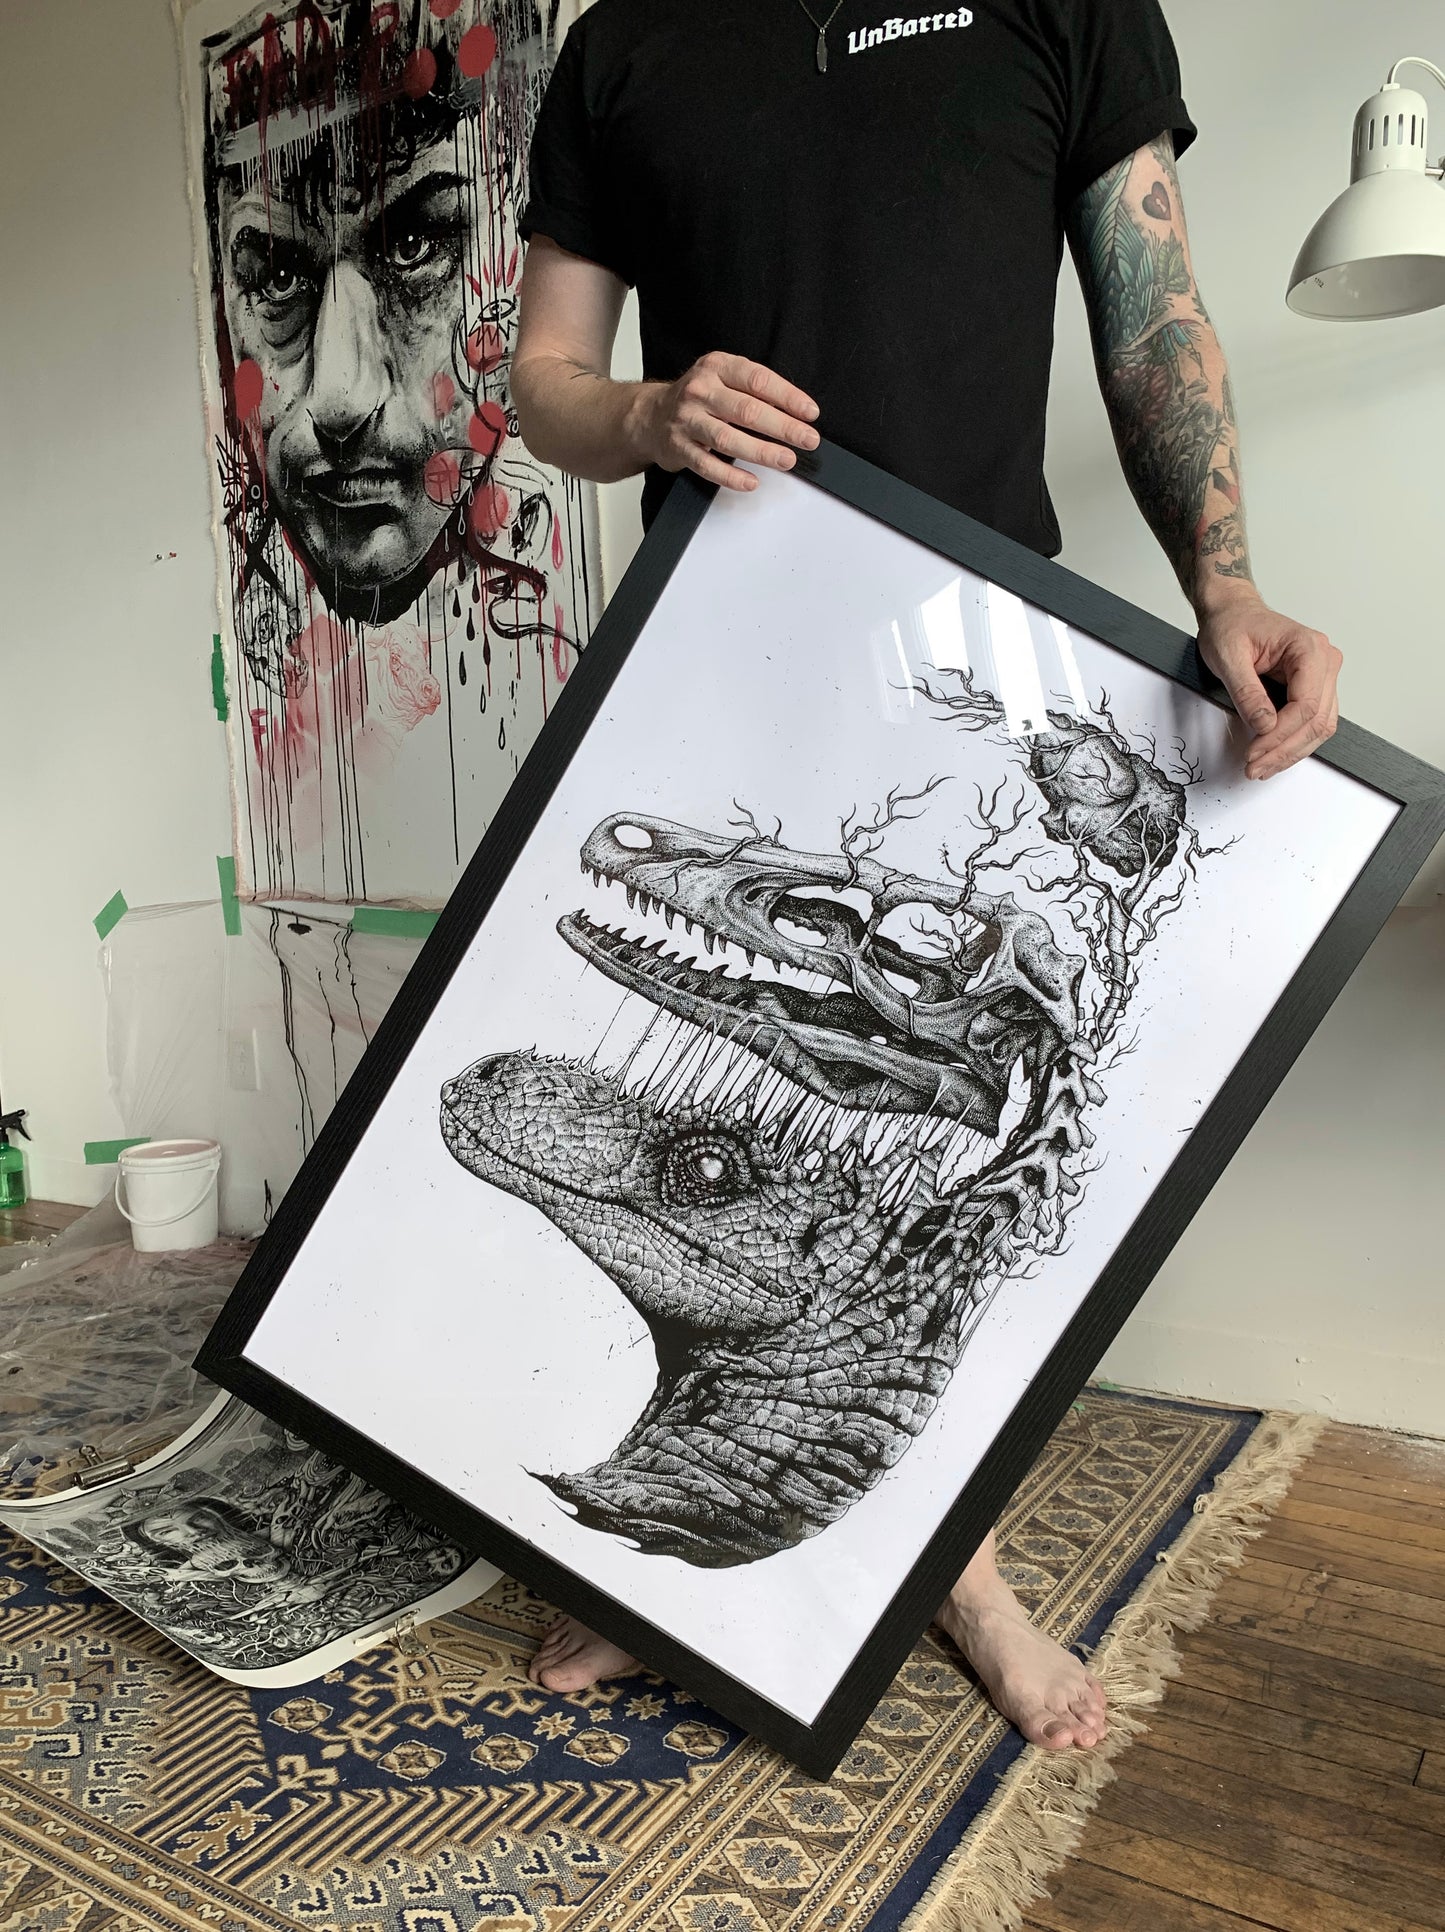 Raptor Skull Extraction - 24x36" print.